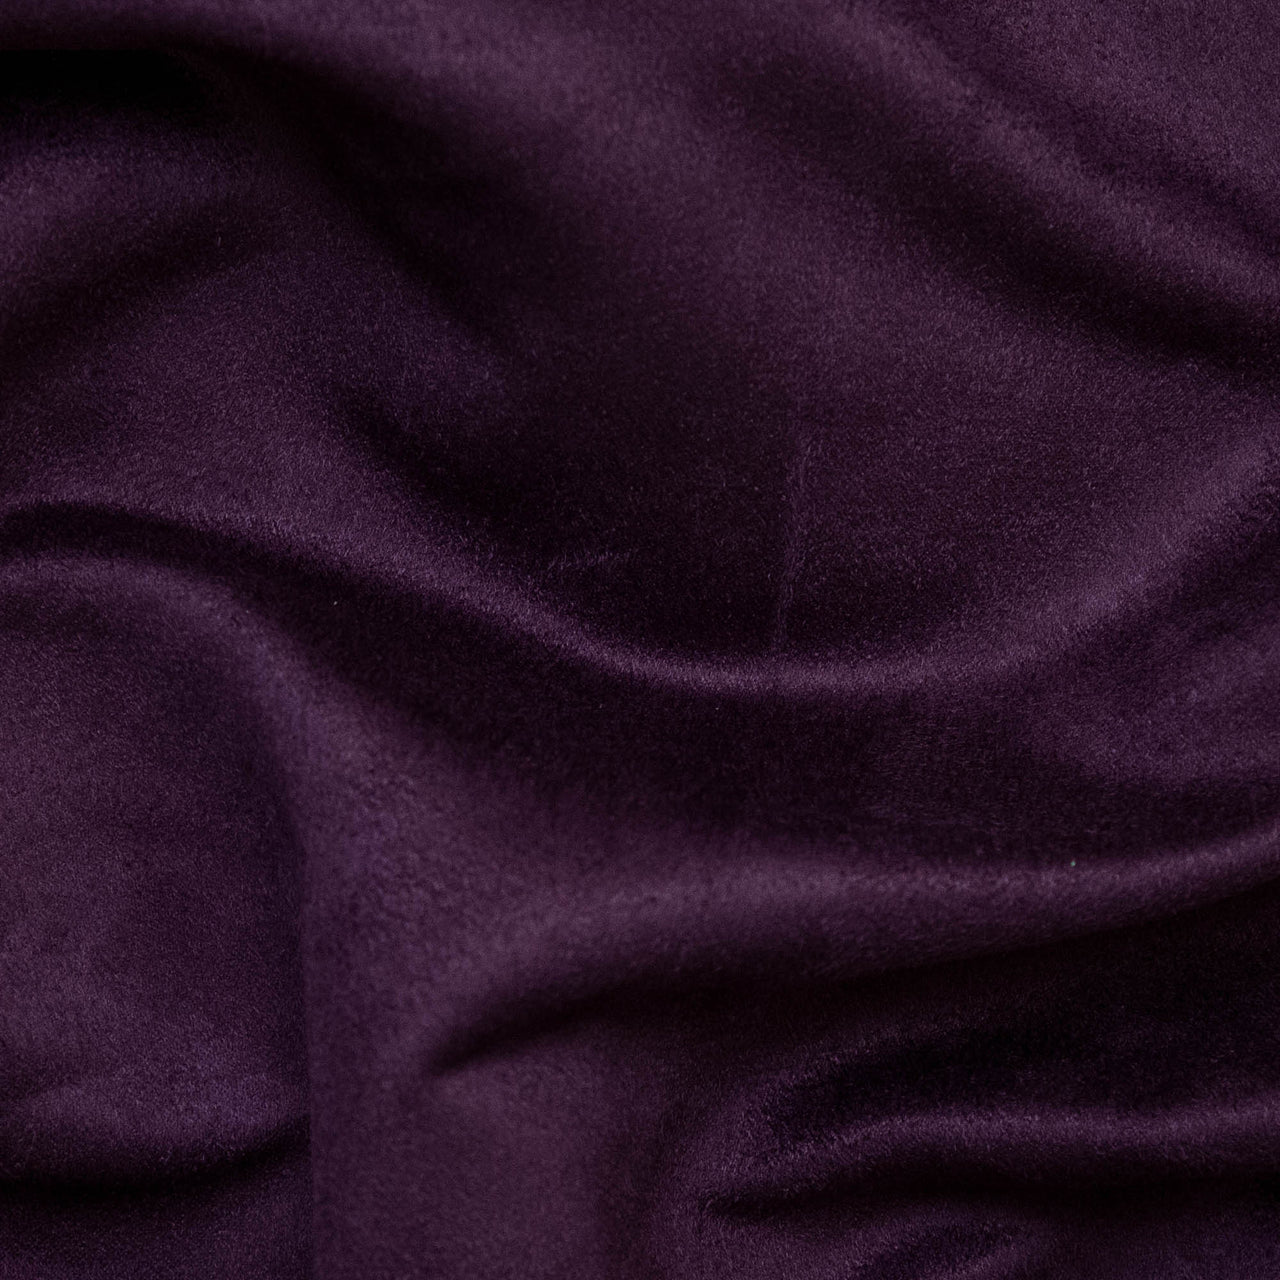 Purple - Premium Faux Suede for Car Interior, Interior Design, Upholstery & Soft Furnishings